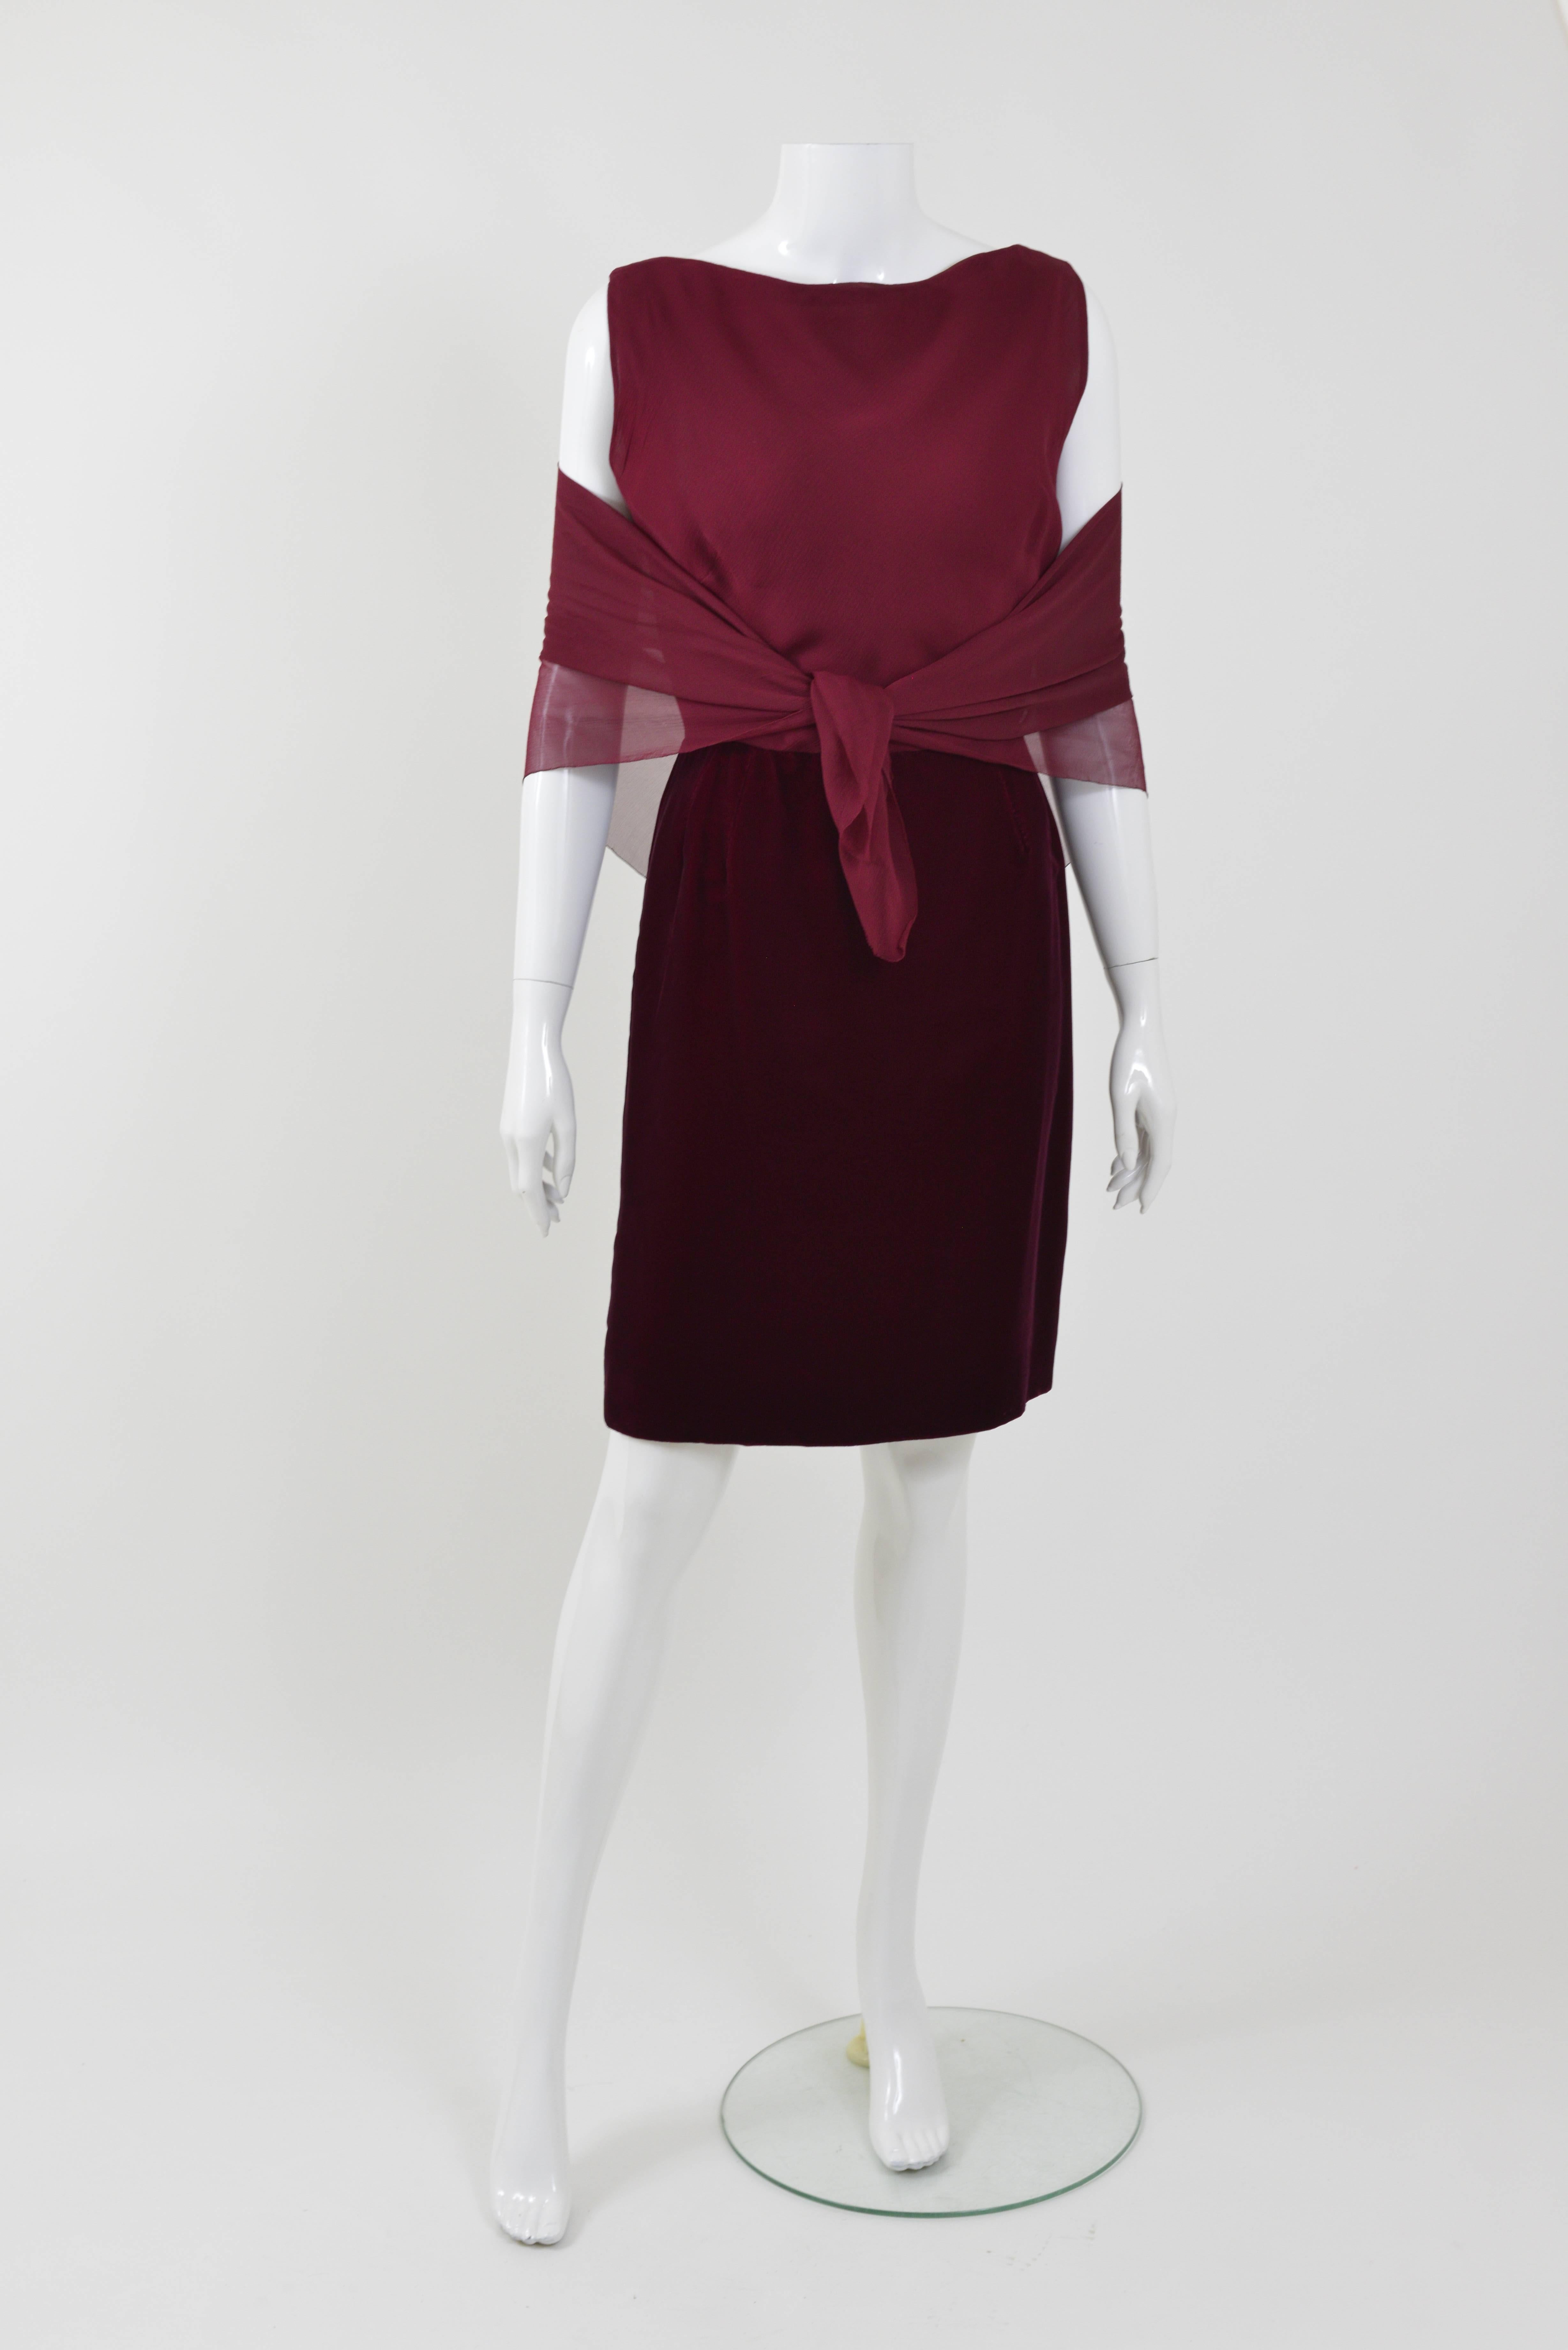 1960s CURIEL Italian Couture Burgundy Velvet Cocktail Dress with Bolero  1